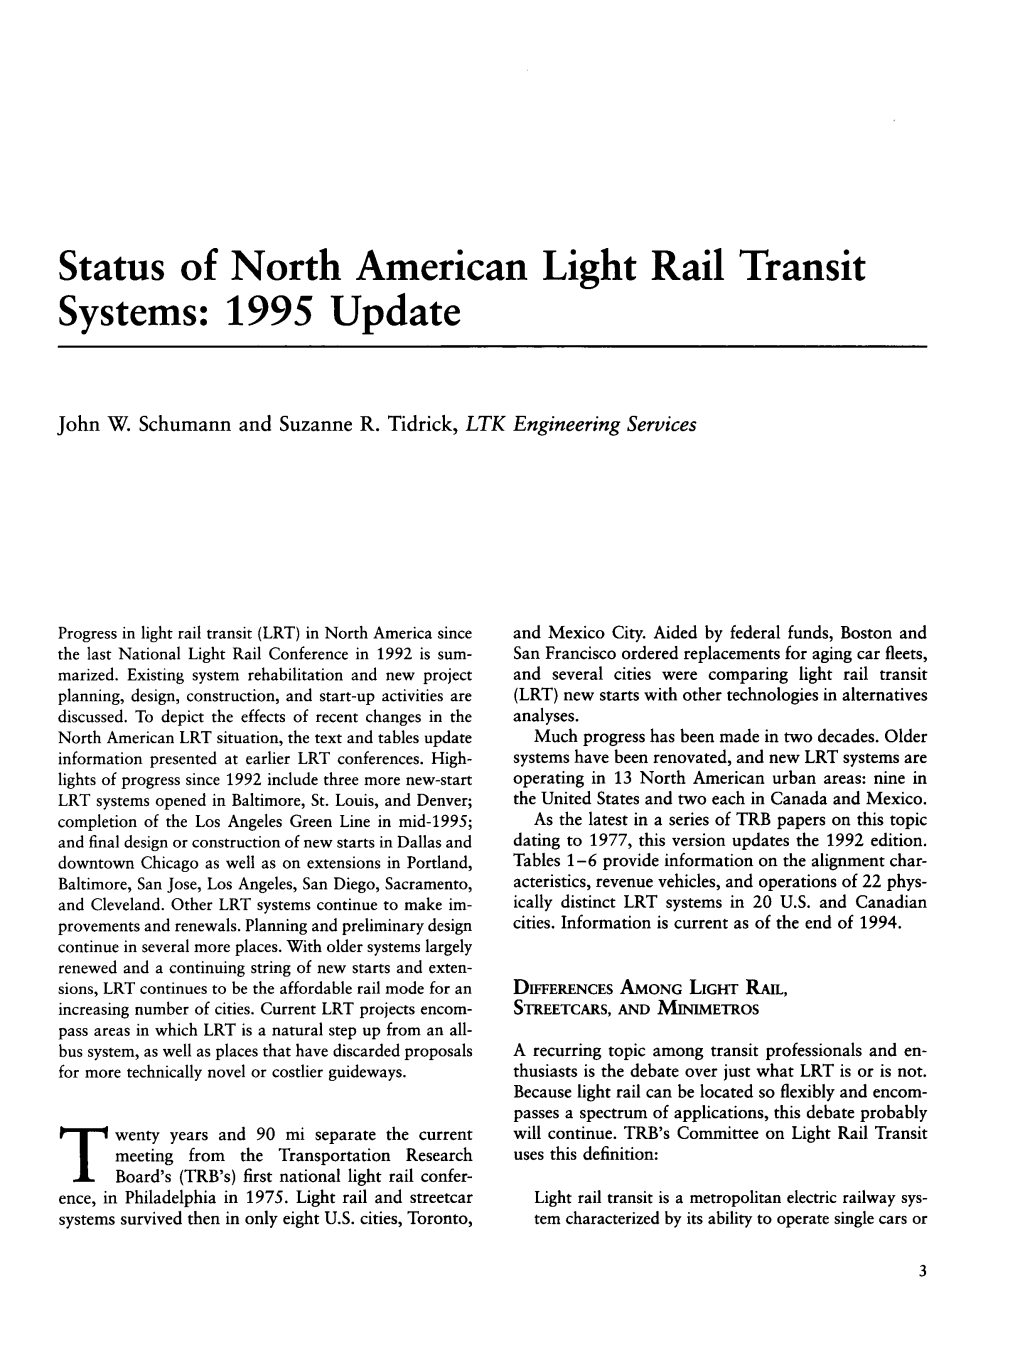 Status of North American Light Rail Transit Systems: 1995 Update